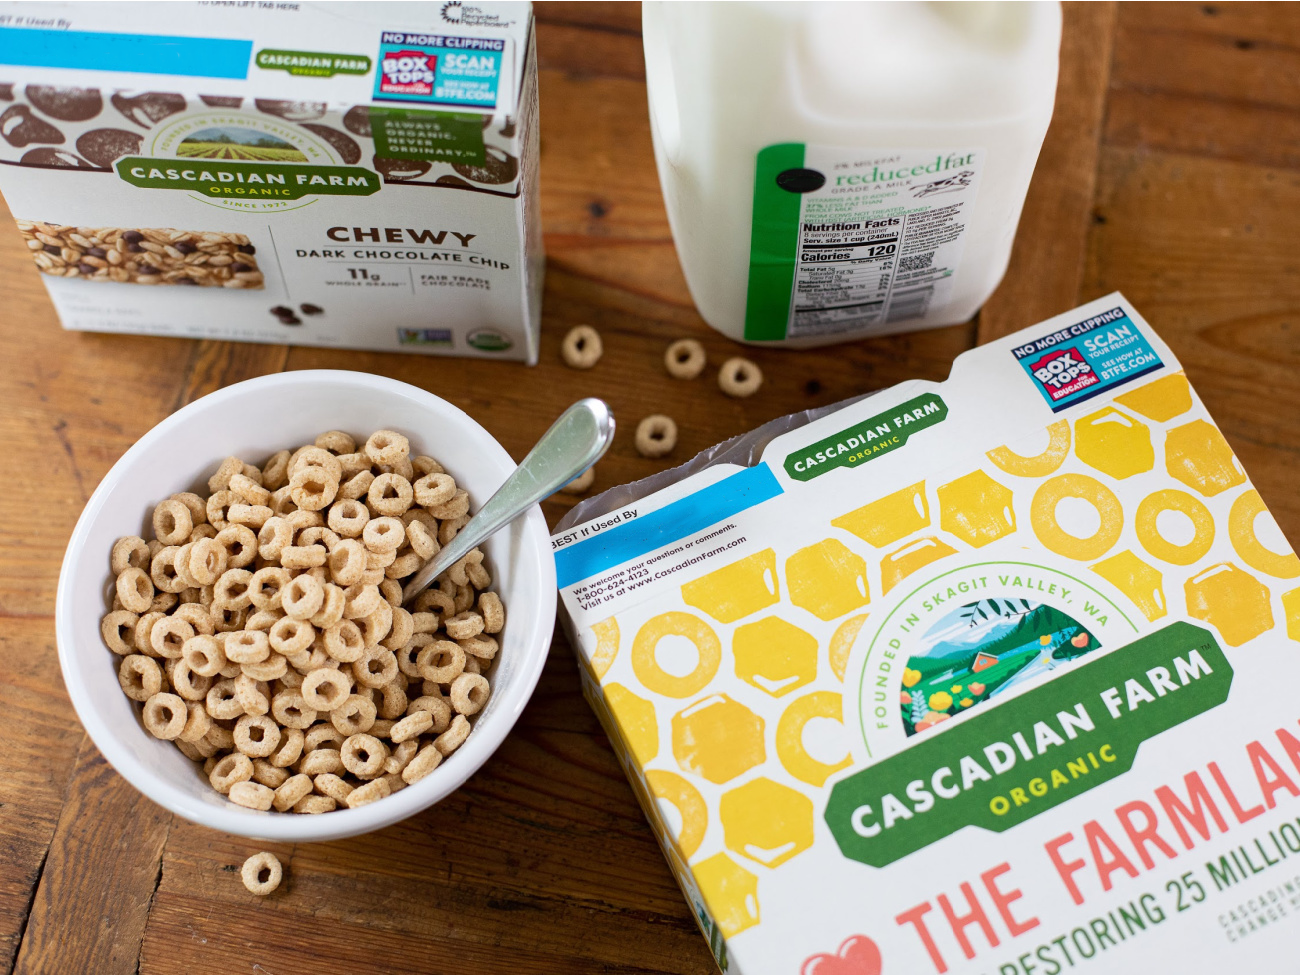 Cascadian Farm Organic Cereal Just $2.49 At Kroger (Regular Price $4.49)